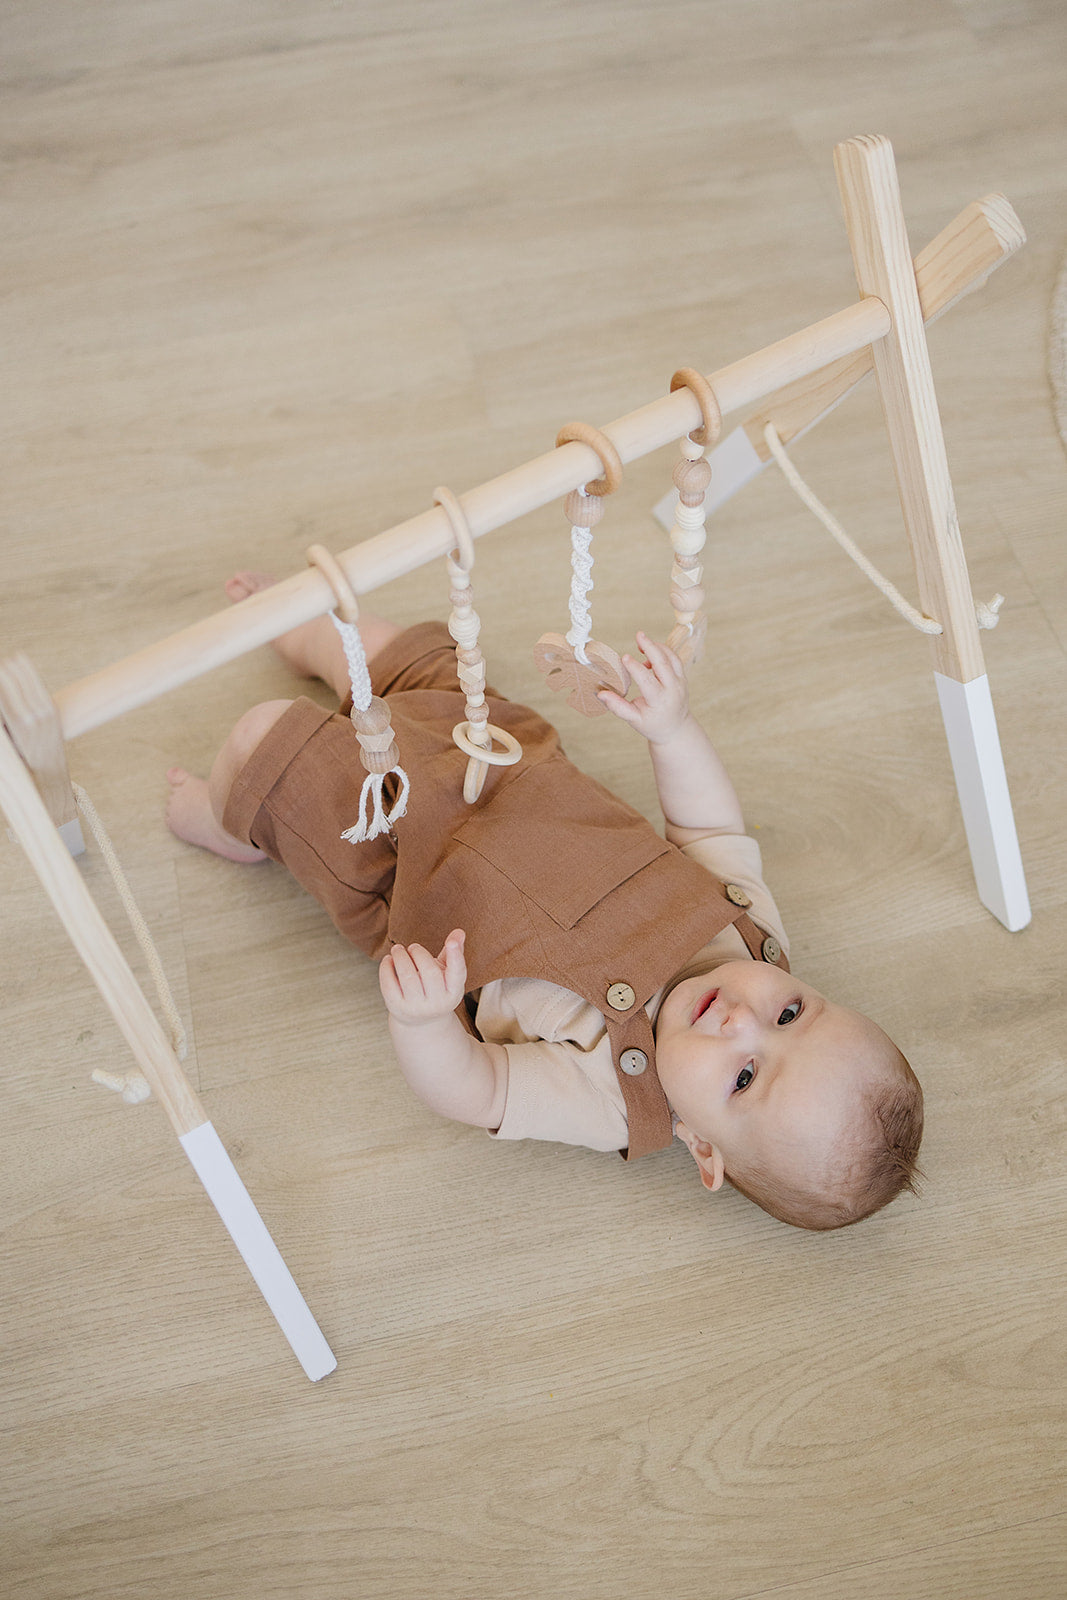 Wooden Baby Gym + Macrame Toys  - Poppyseed Play